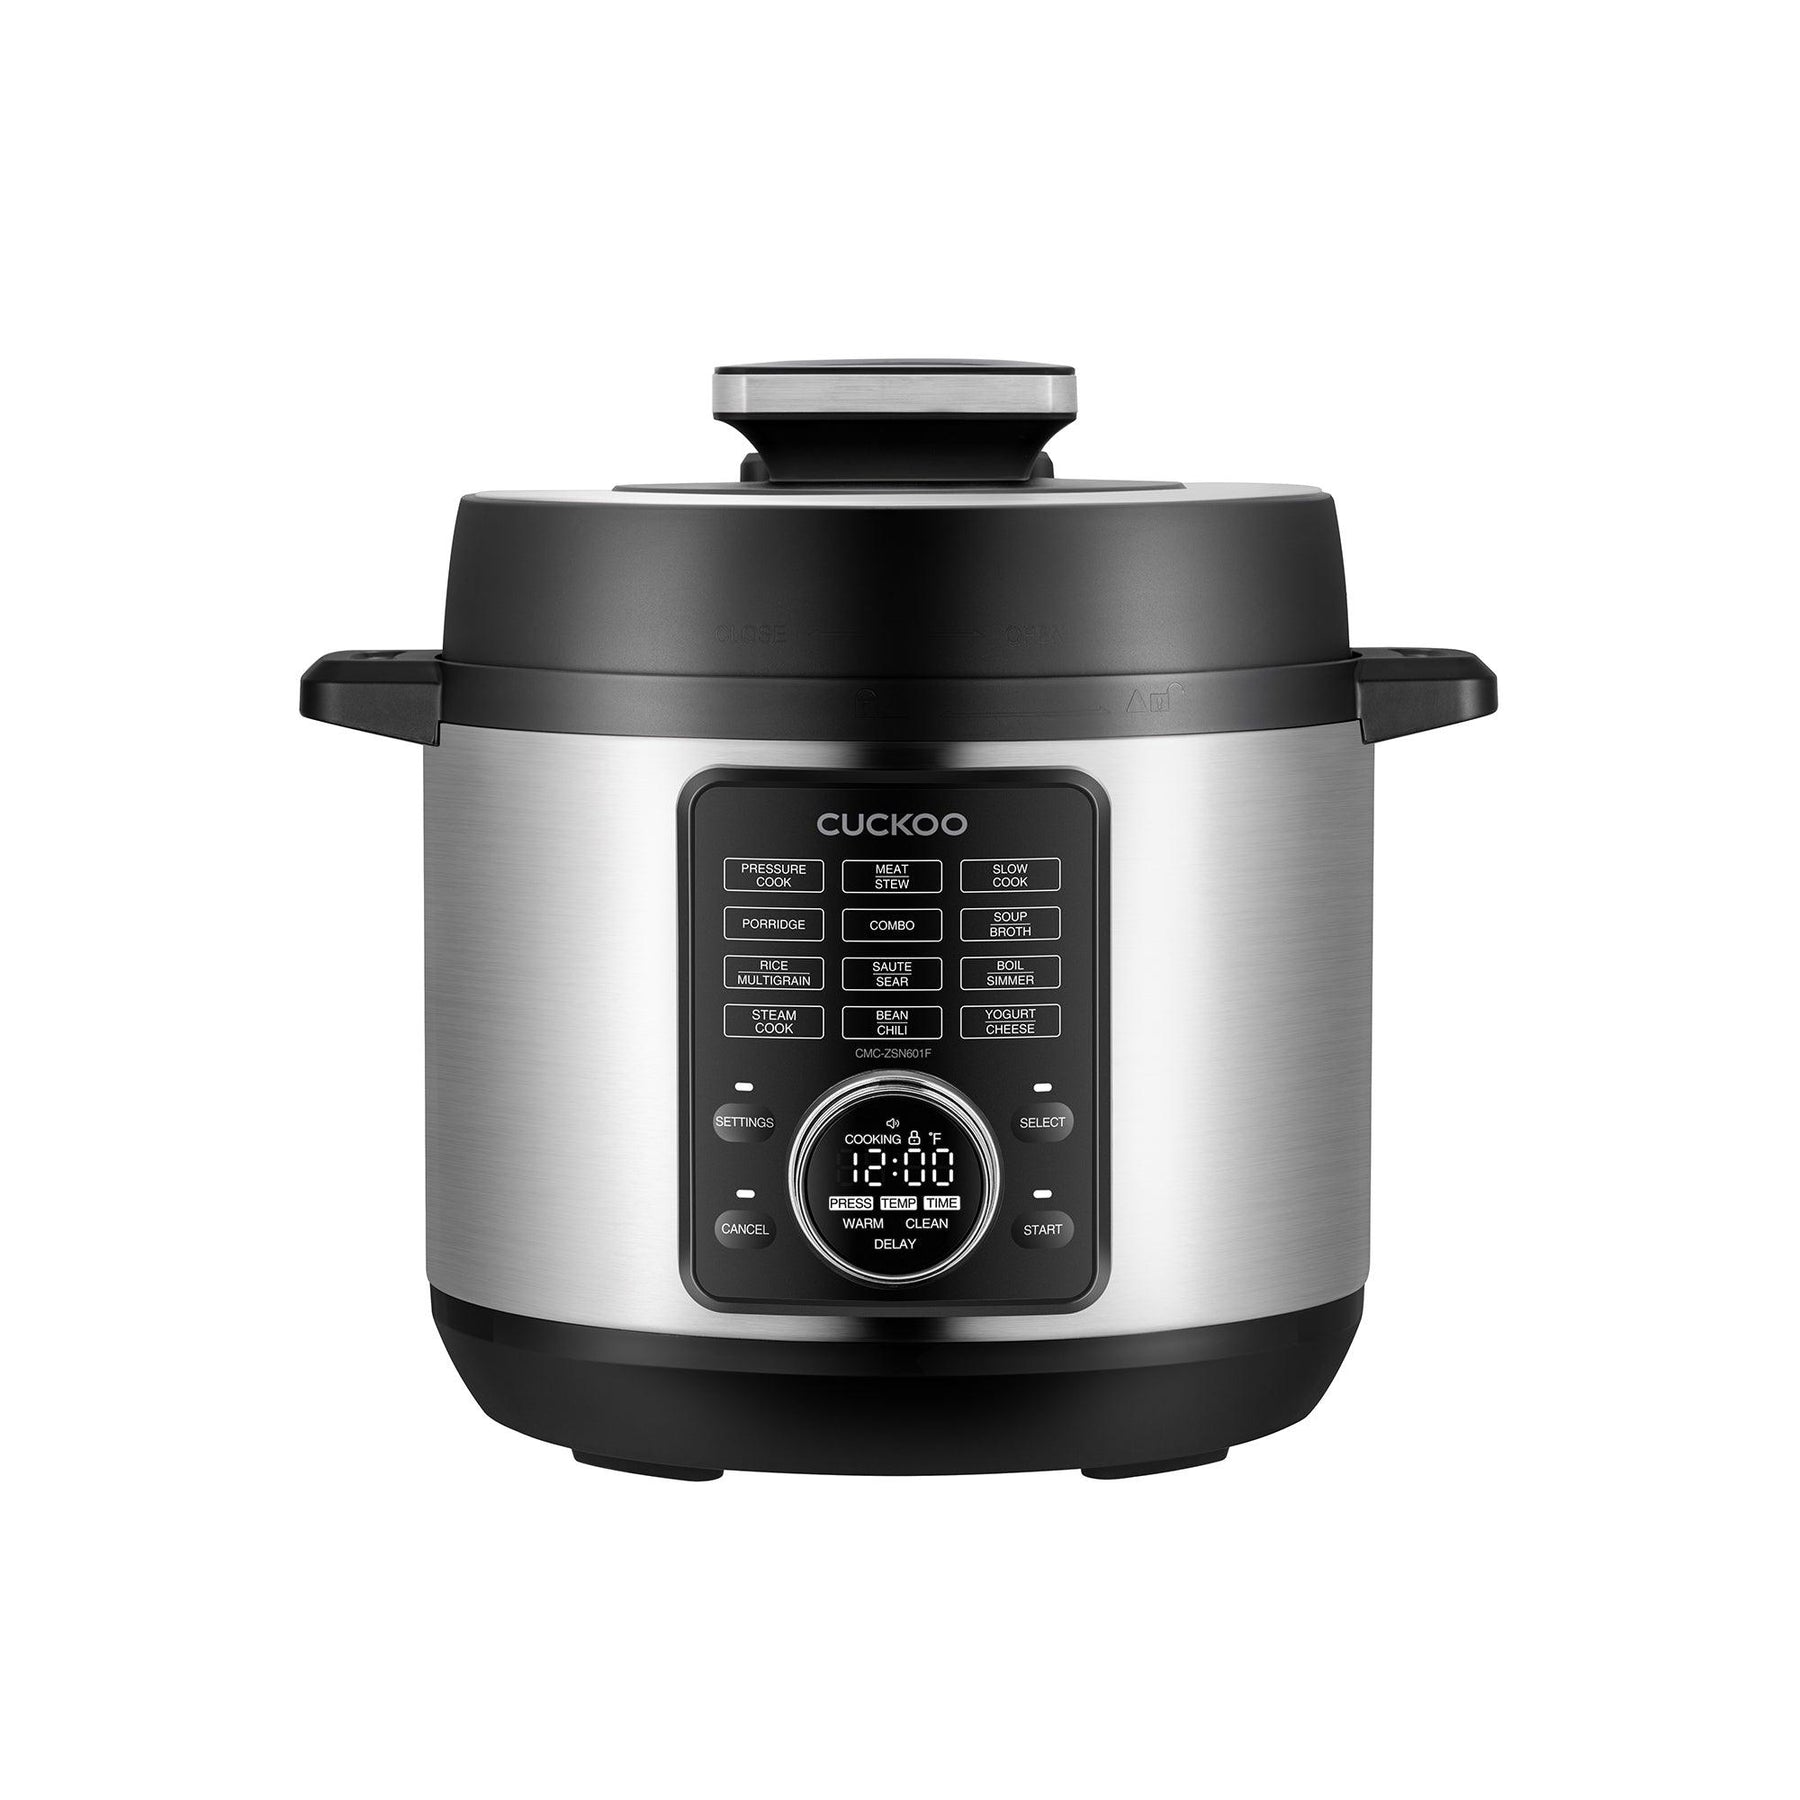 CUCKOO Electric Pressure Cooker 14 Menu Options: White, Slow Cook, Sous  Vide, Porridge, & More, User-Friendly LED Display, Stainless Steel Inner  Pot